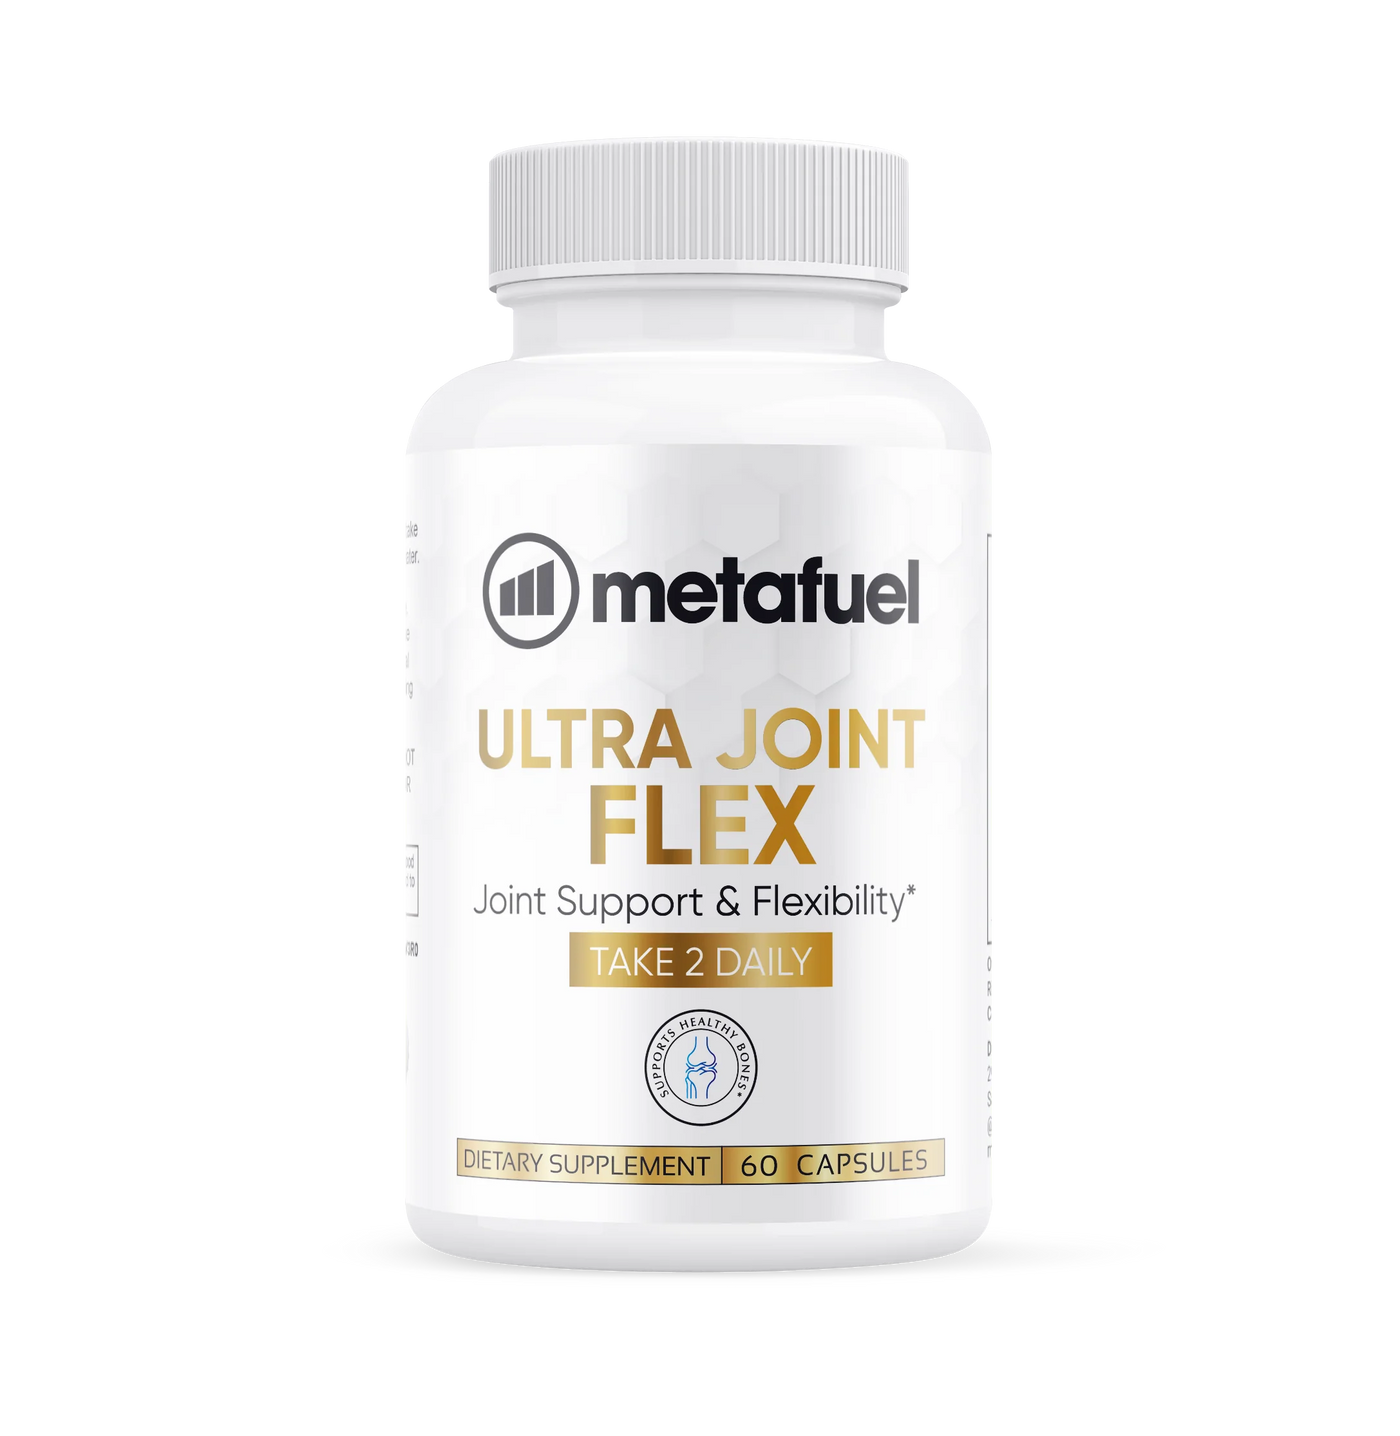 Metafuel Ultra Joint Flex Joint Health